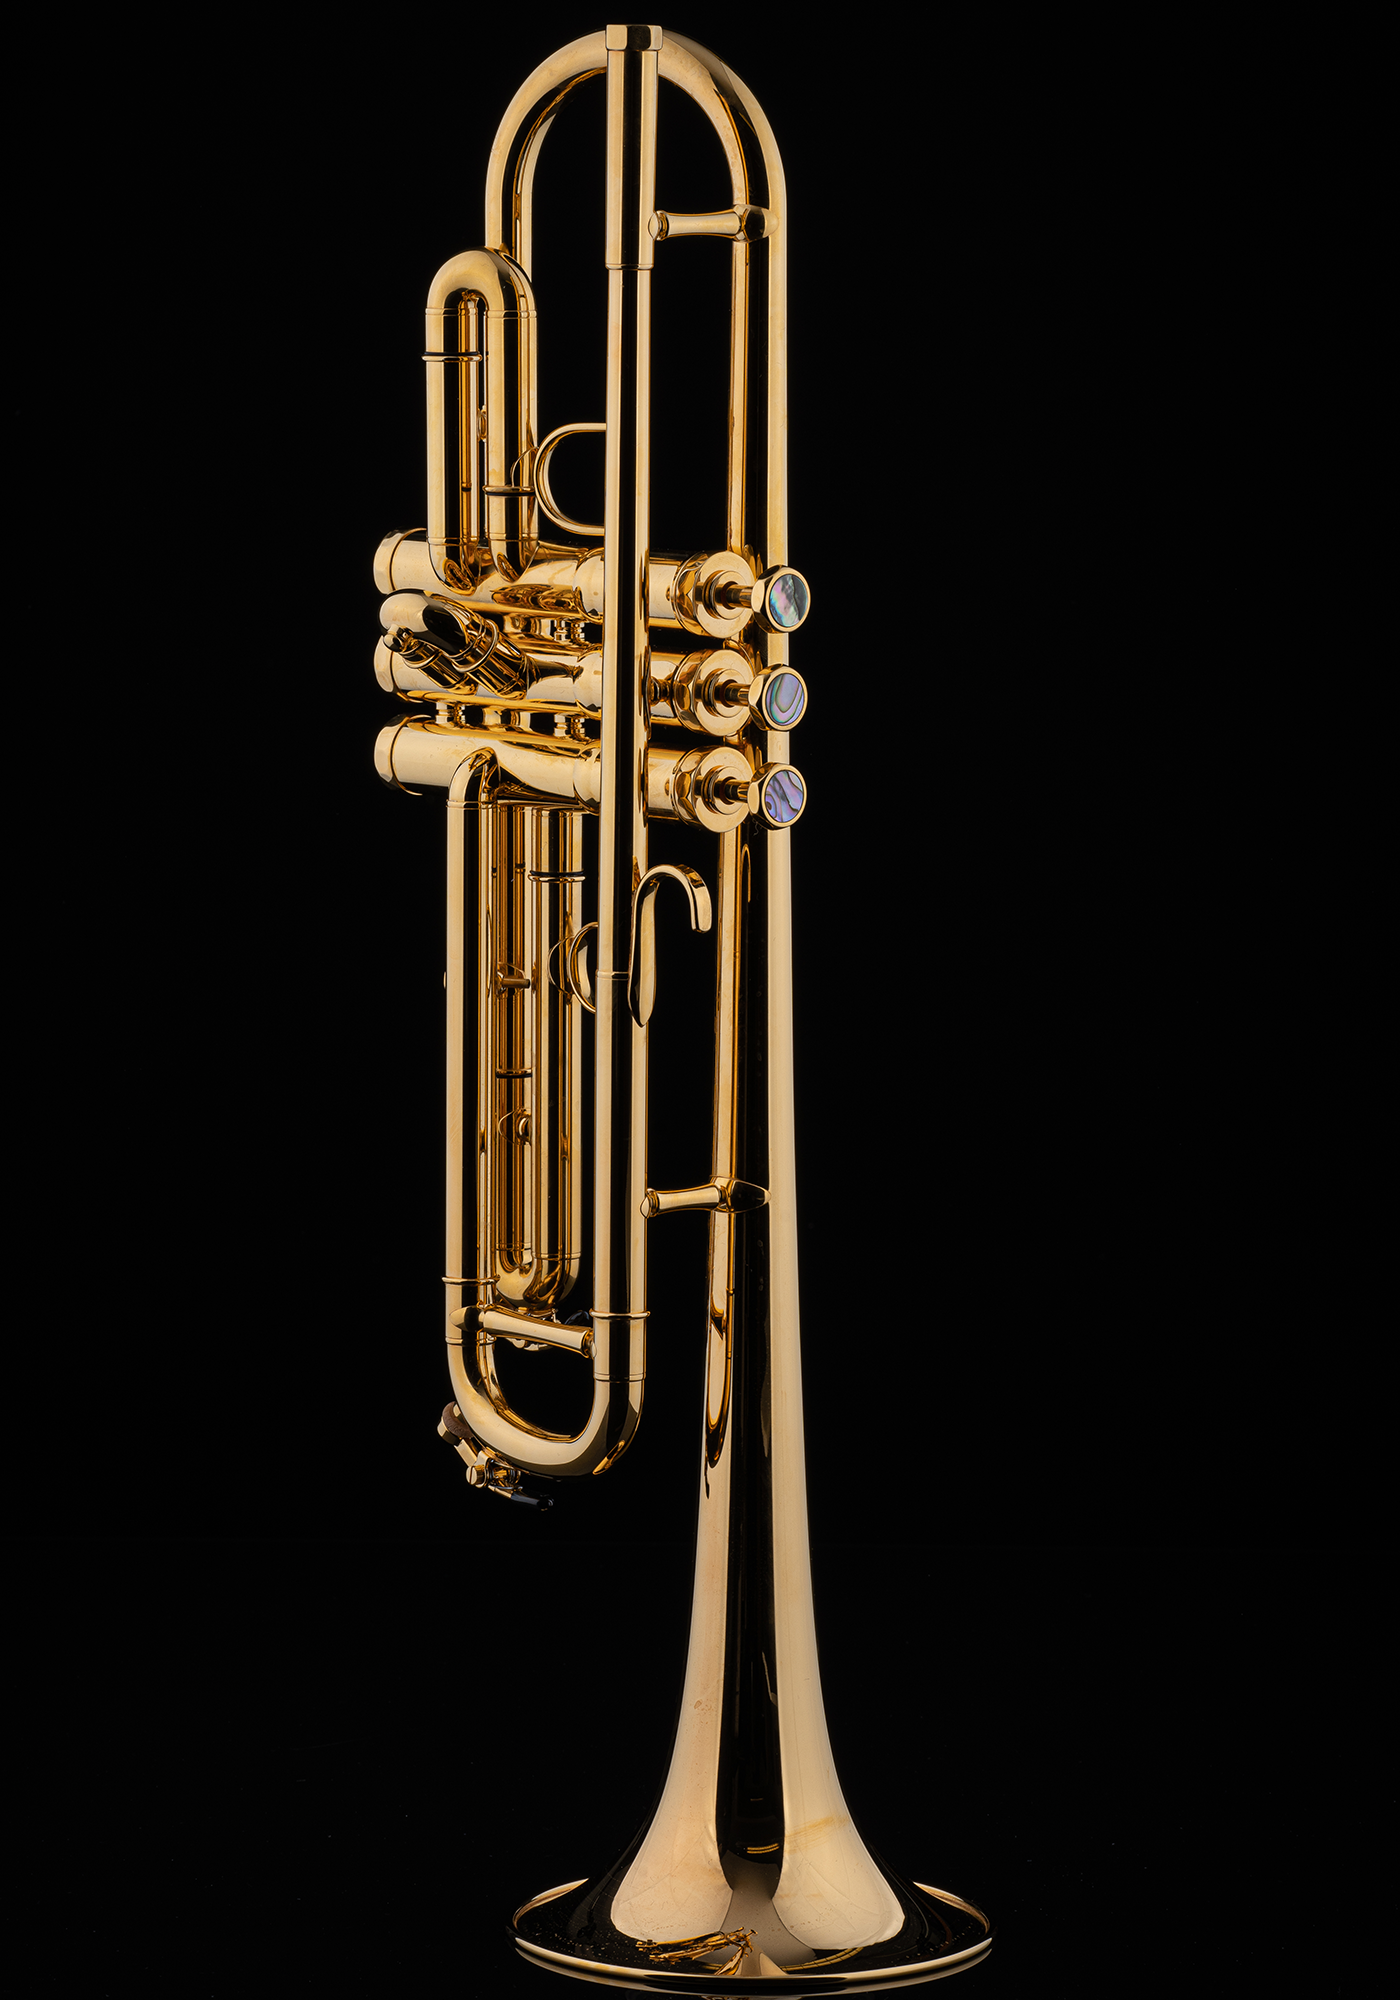 Schagerl B-Trumpet "JAMES MORRISON" gold plated